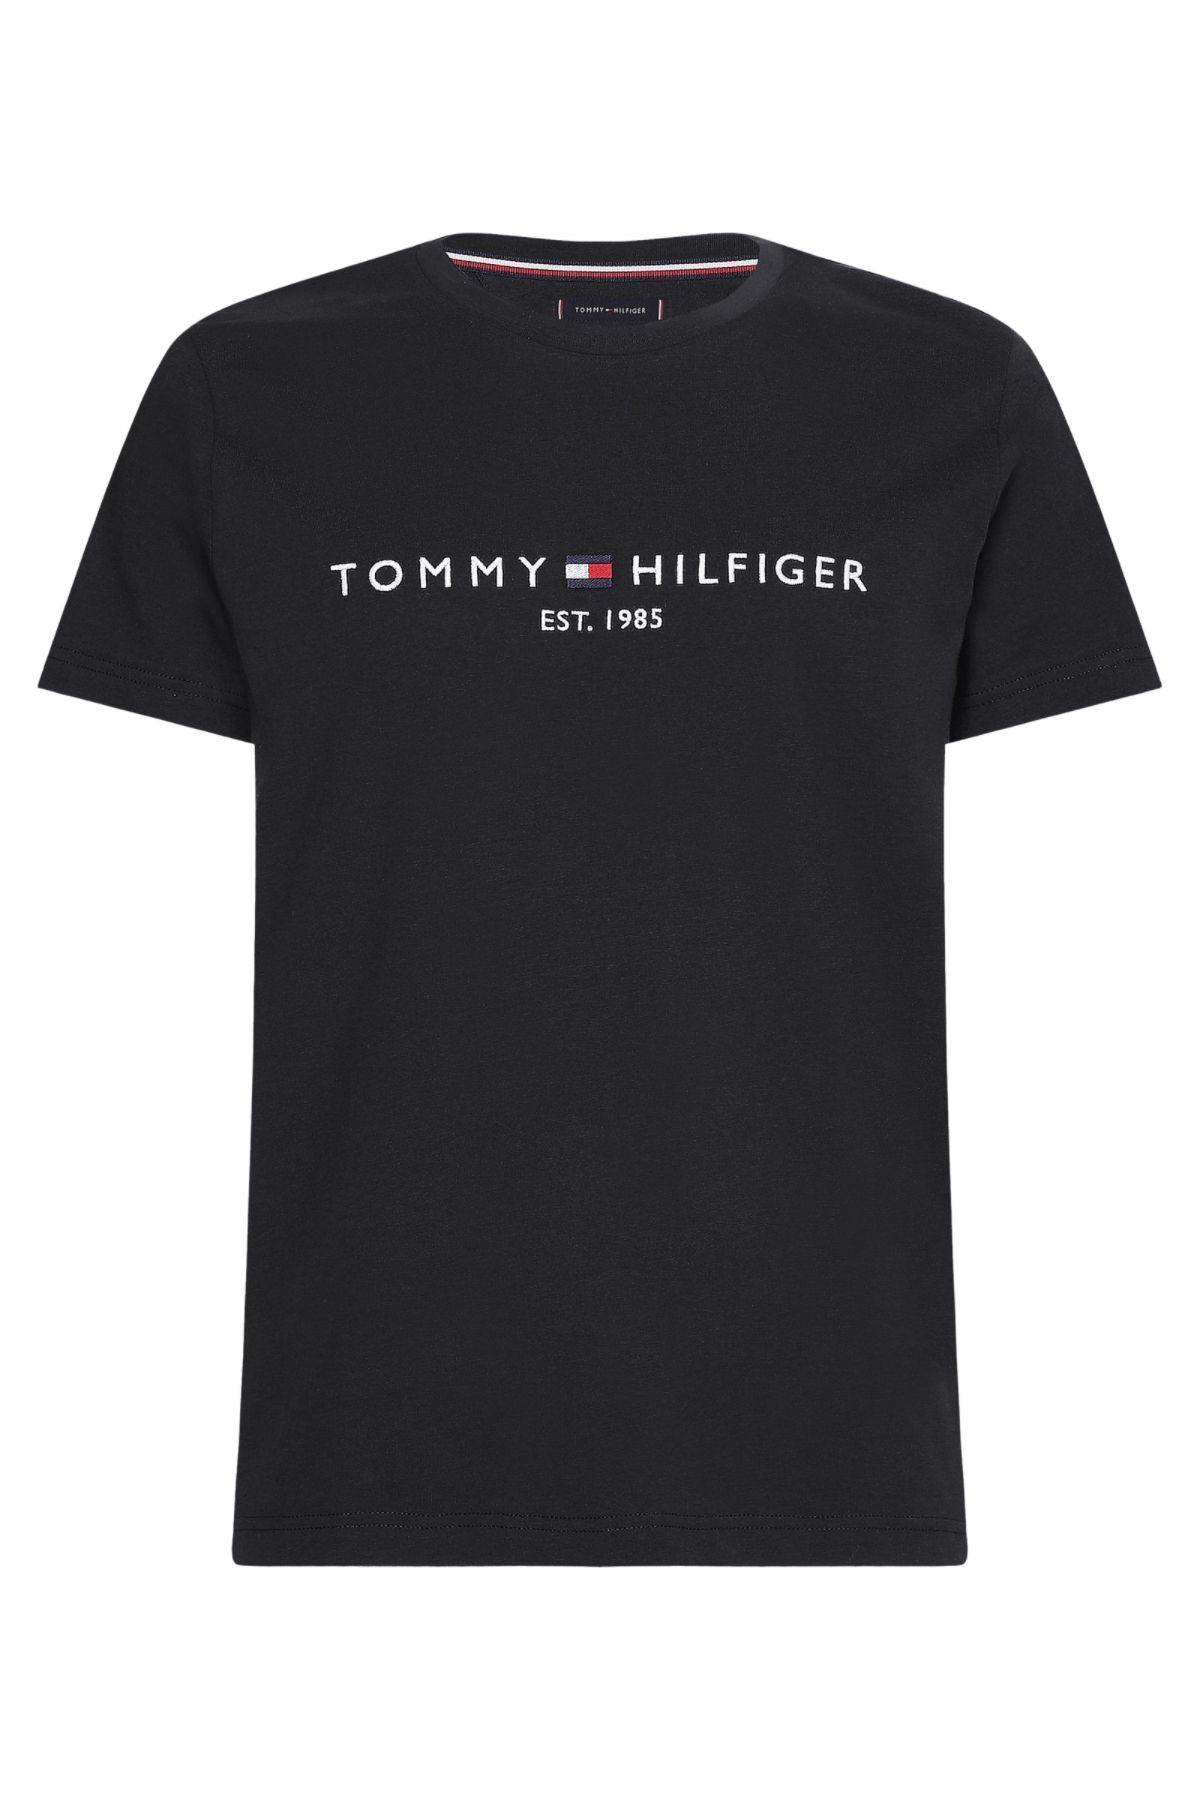 Tommy Hilfiger Erkek Marka Logolu Gündelik Kullanıma Uygun Organik Pamuklu Siyah T-shirt Mw0mw11465bas-siyah